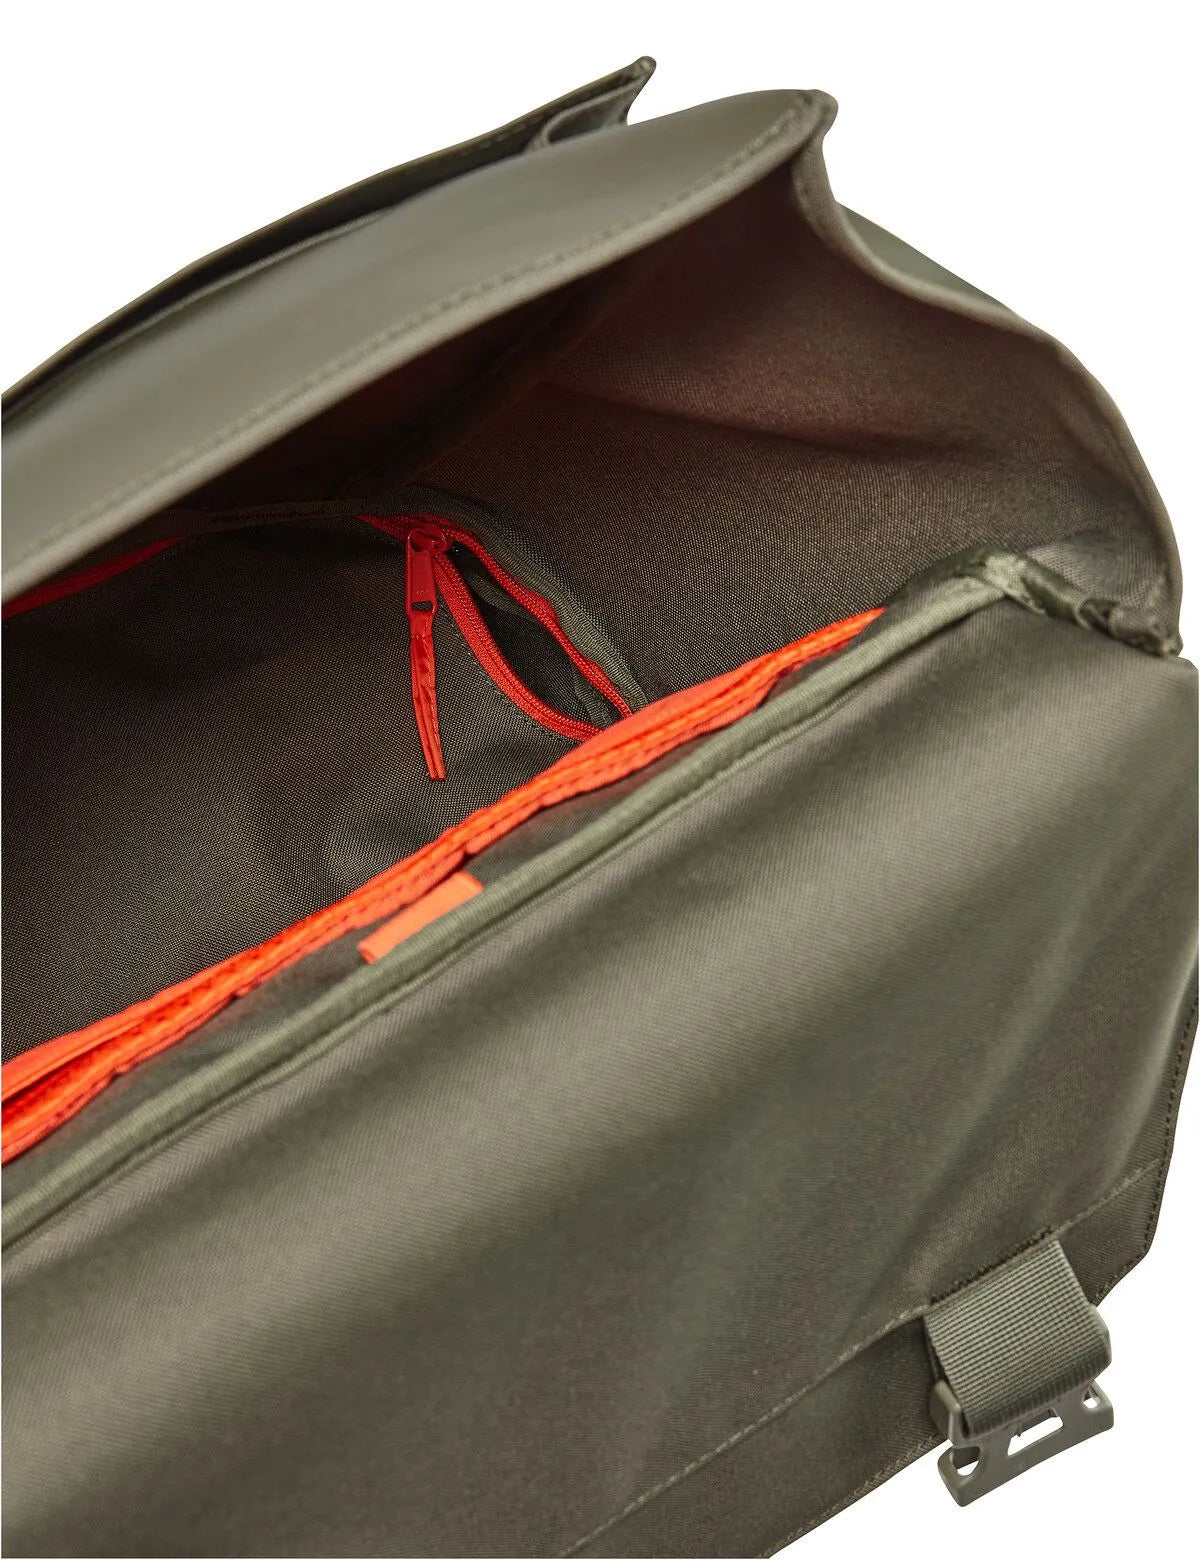 Vaude - Mineo Backpack 30 - Recycled Polyester - Weekendbee - sustainable sportswear